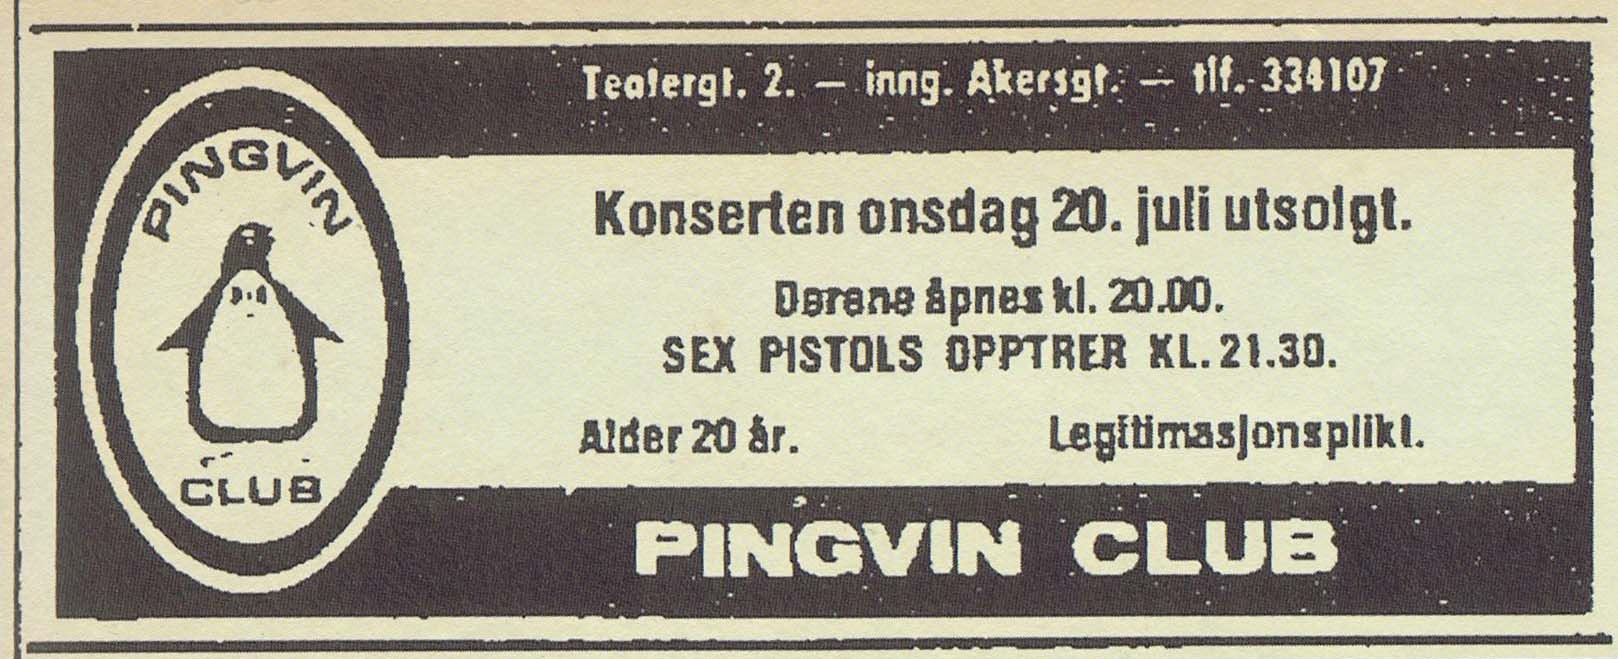 Pinvinen Restaurant, Oslo, Norway, July 20th 1977 - Ticket